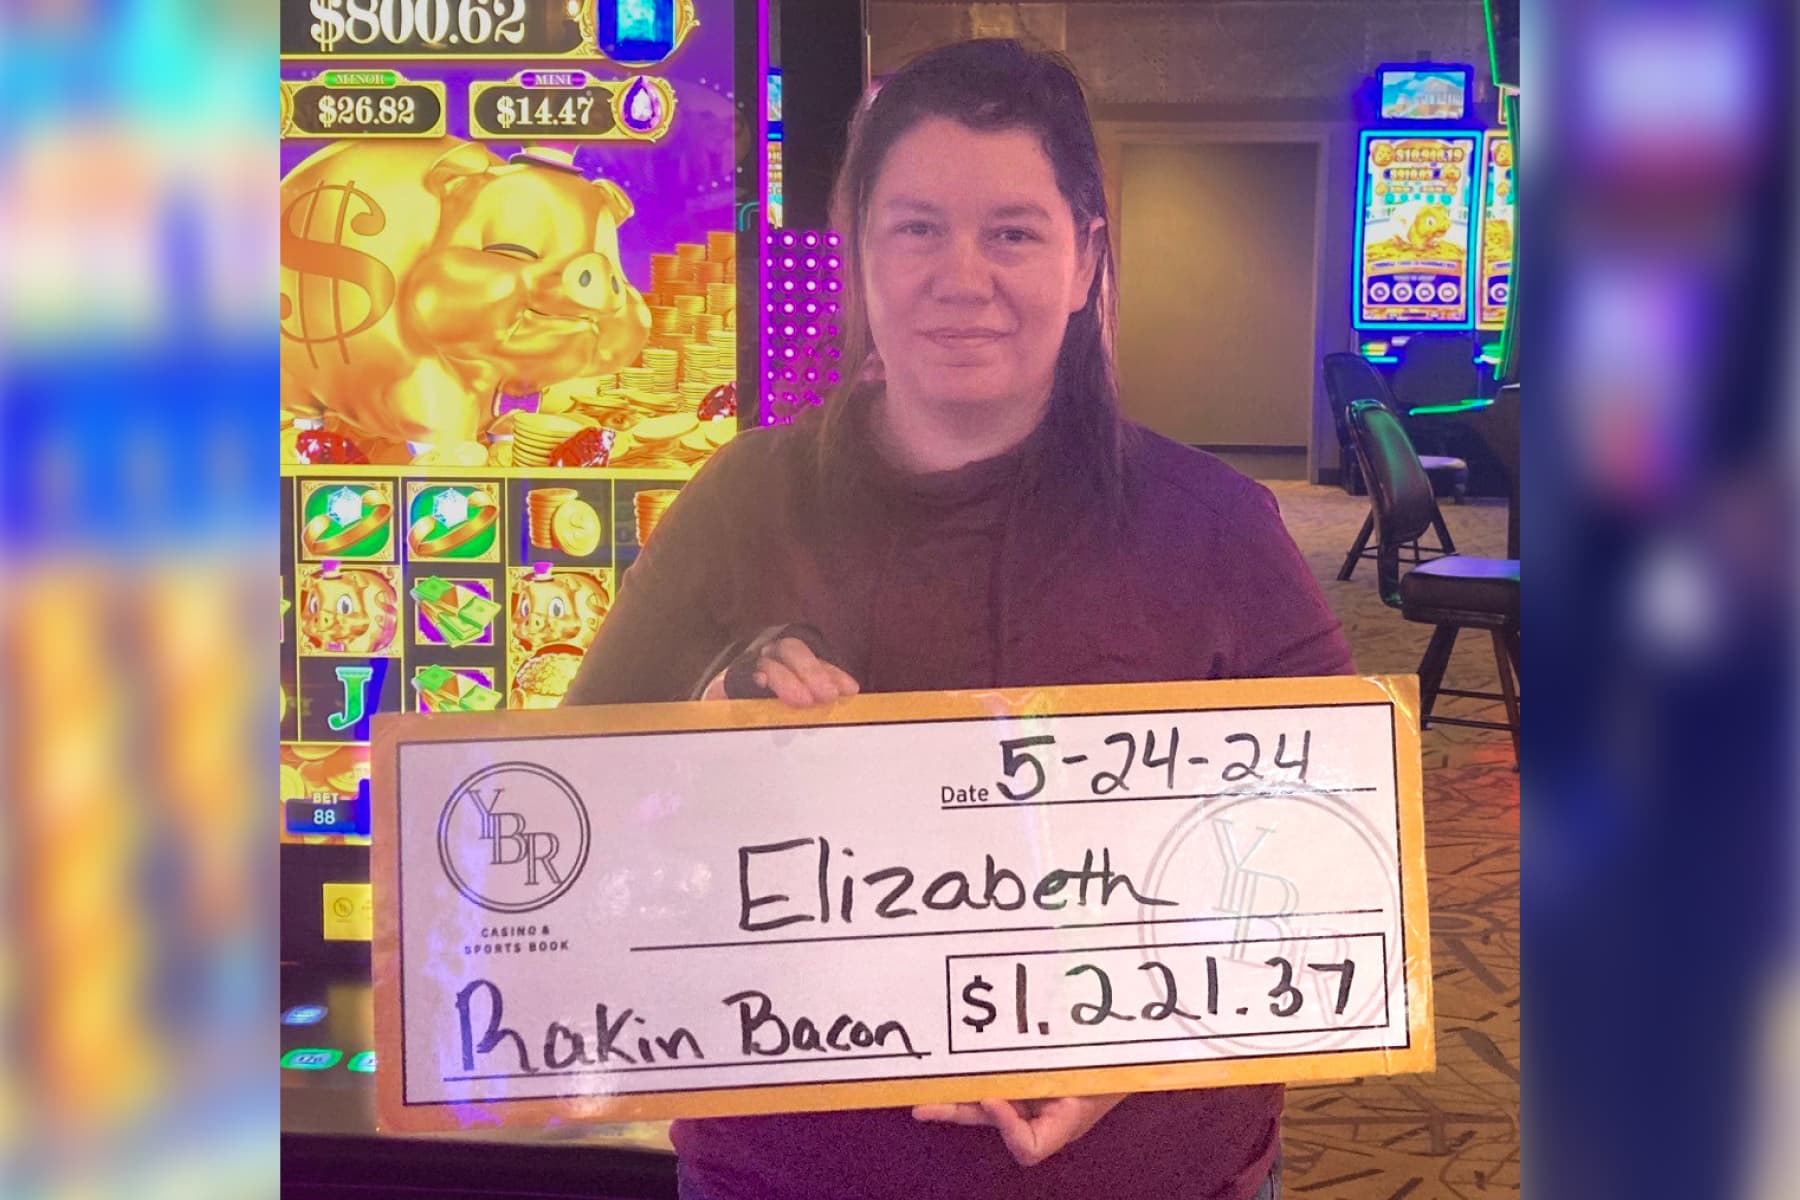 Elizabeth won $1,221